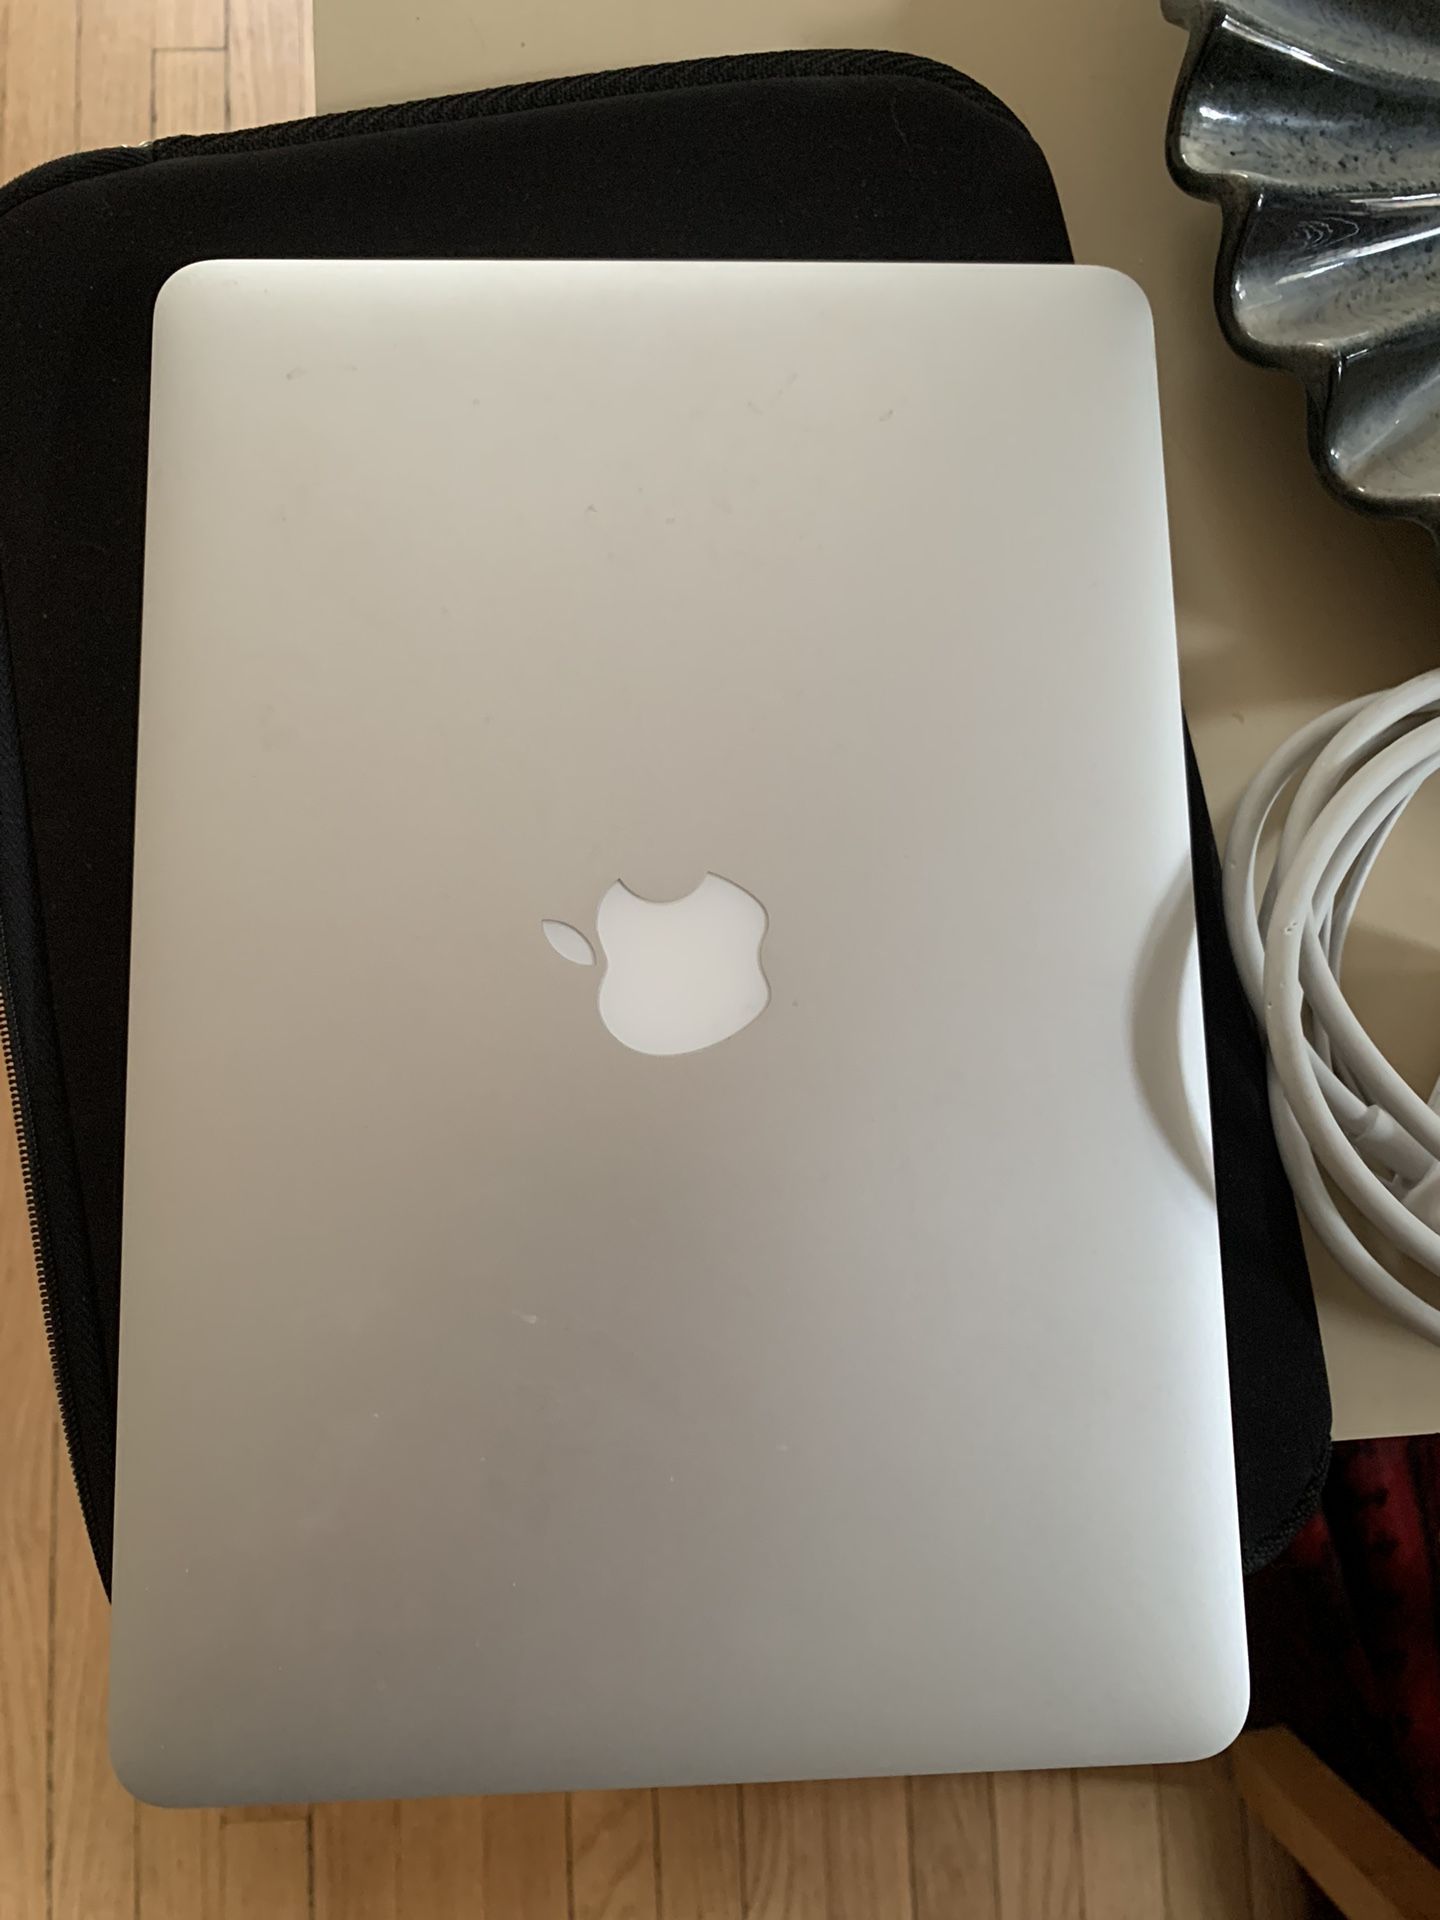 Mid-2015 Macbook Pro Retina 13” Laptop